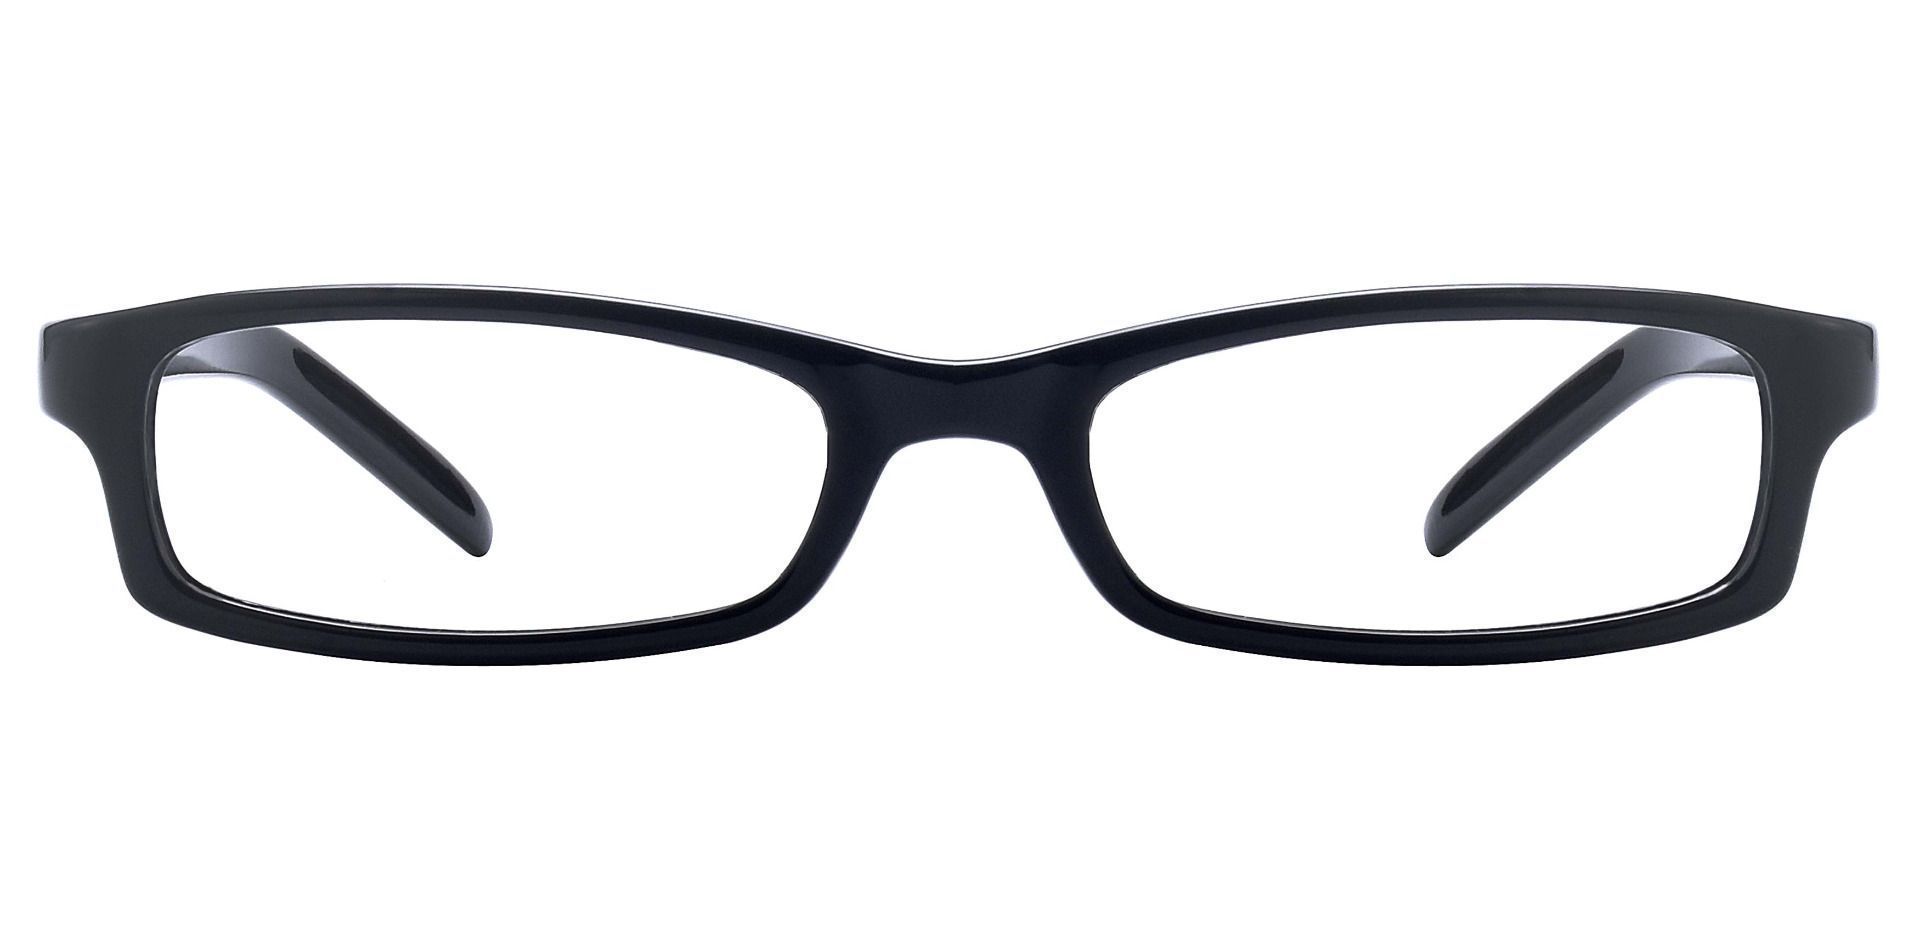 Palmer Rectangle Prescription Glasses - Black